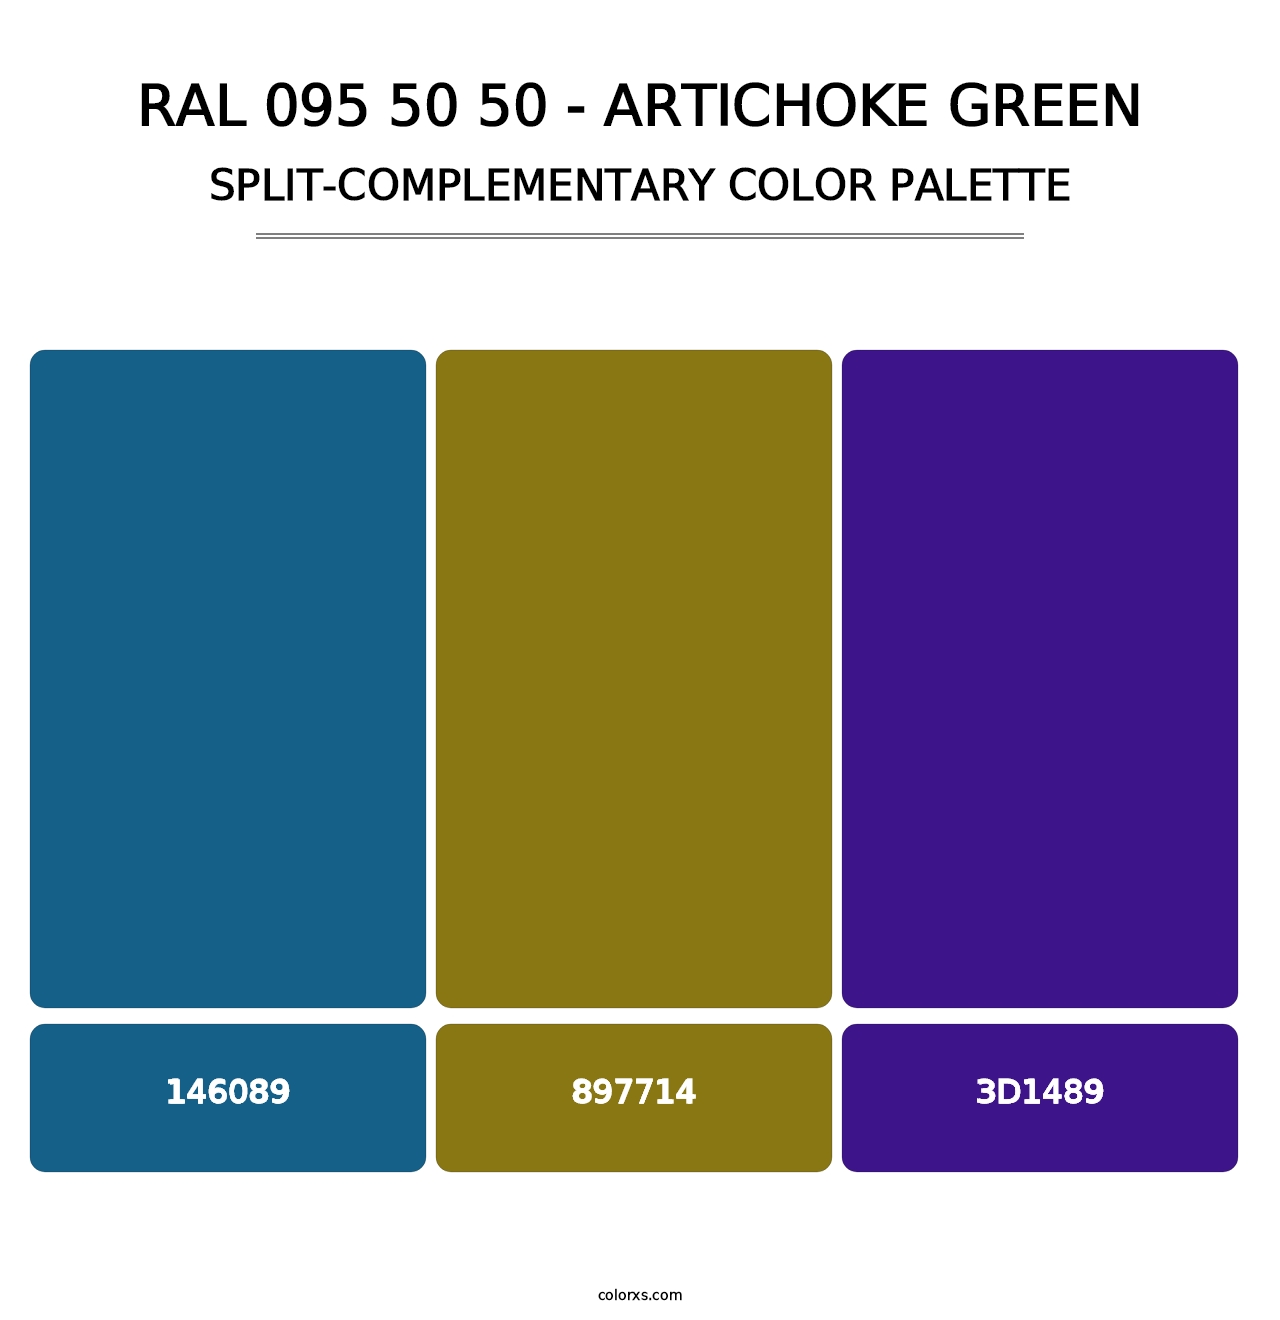 RAL 095 50 50 - Artichoke Green - Split-Complementary Color Palette